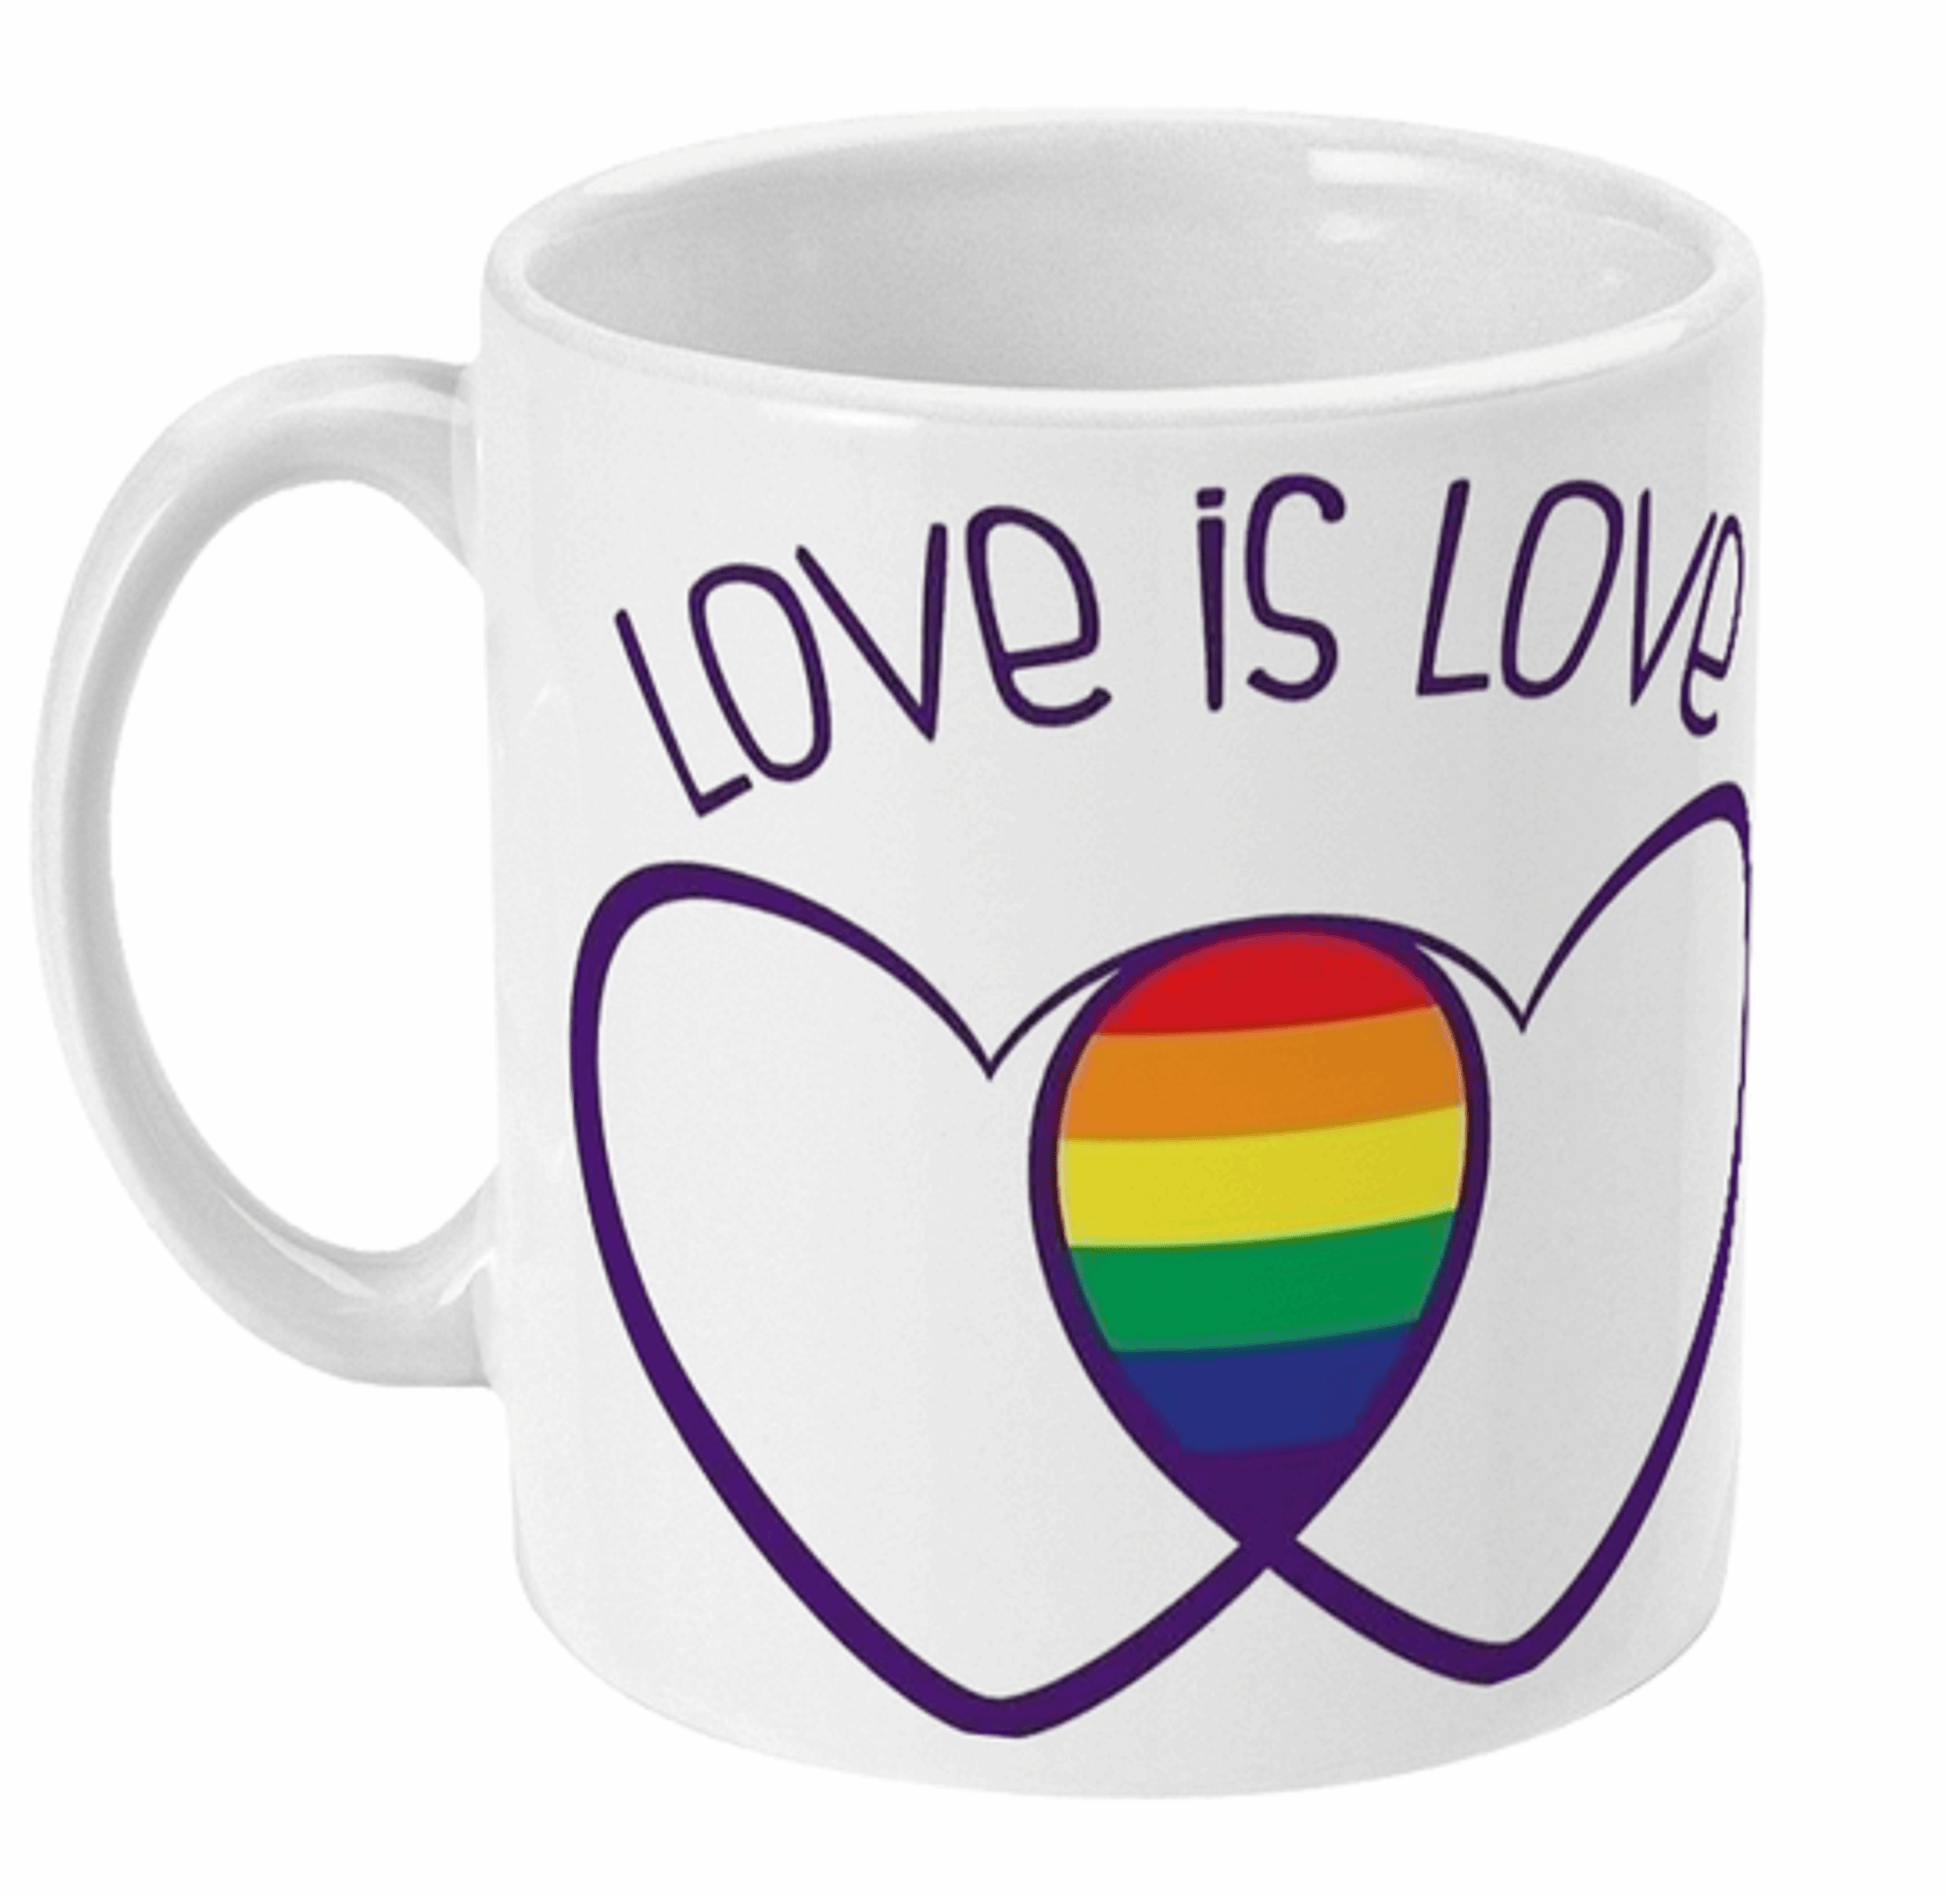  Love is Love Pride Coffee Mug by Free Spirit Accessories sold by Free Spirit Accessories